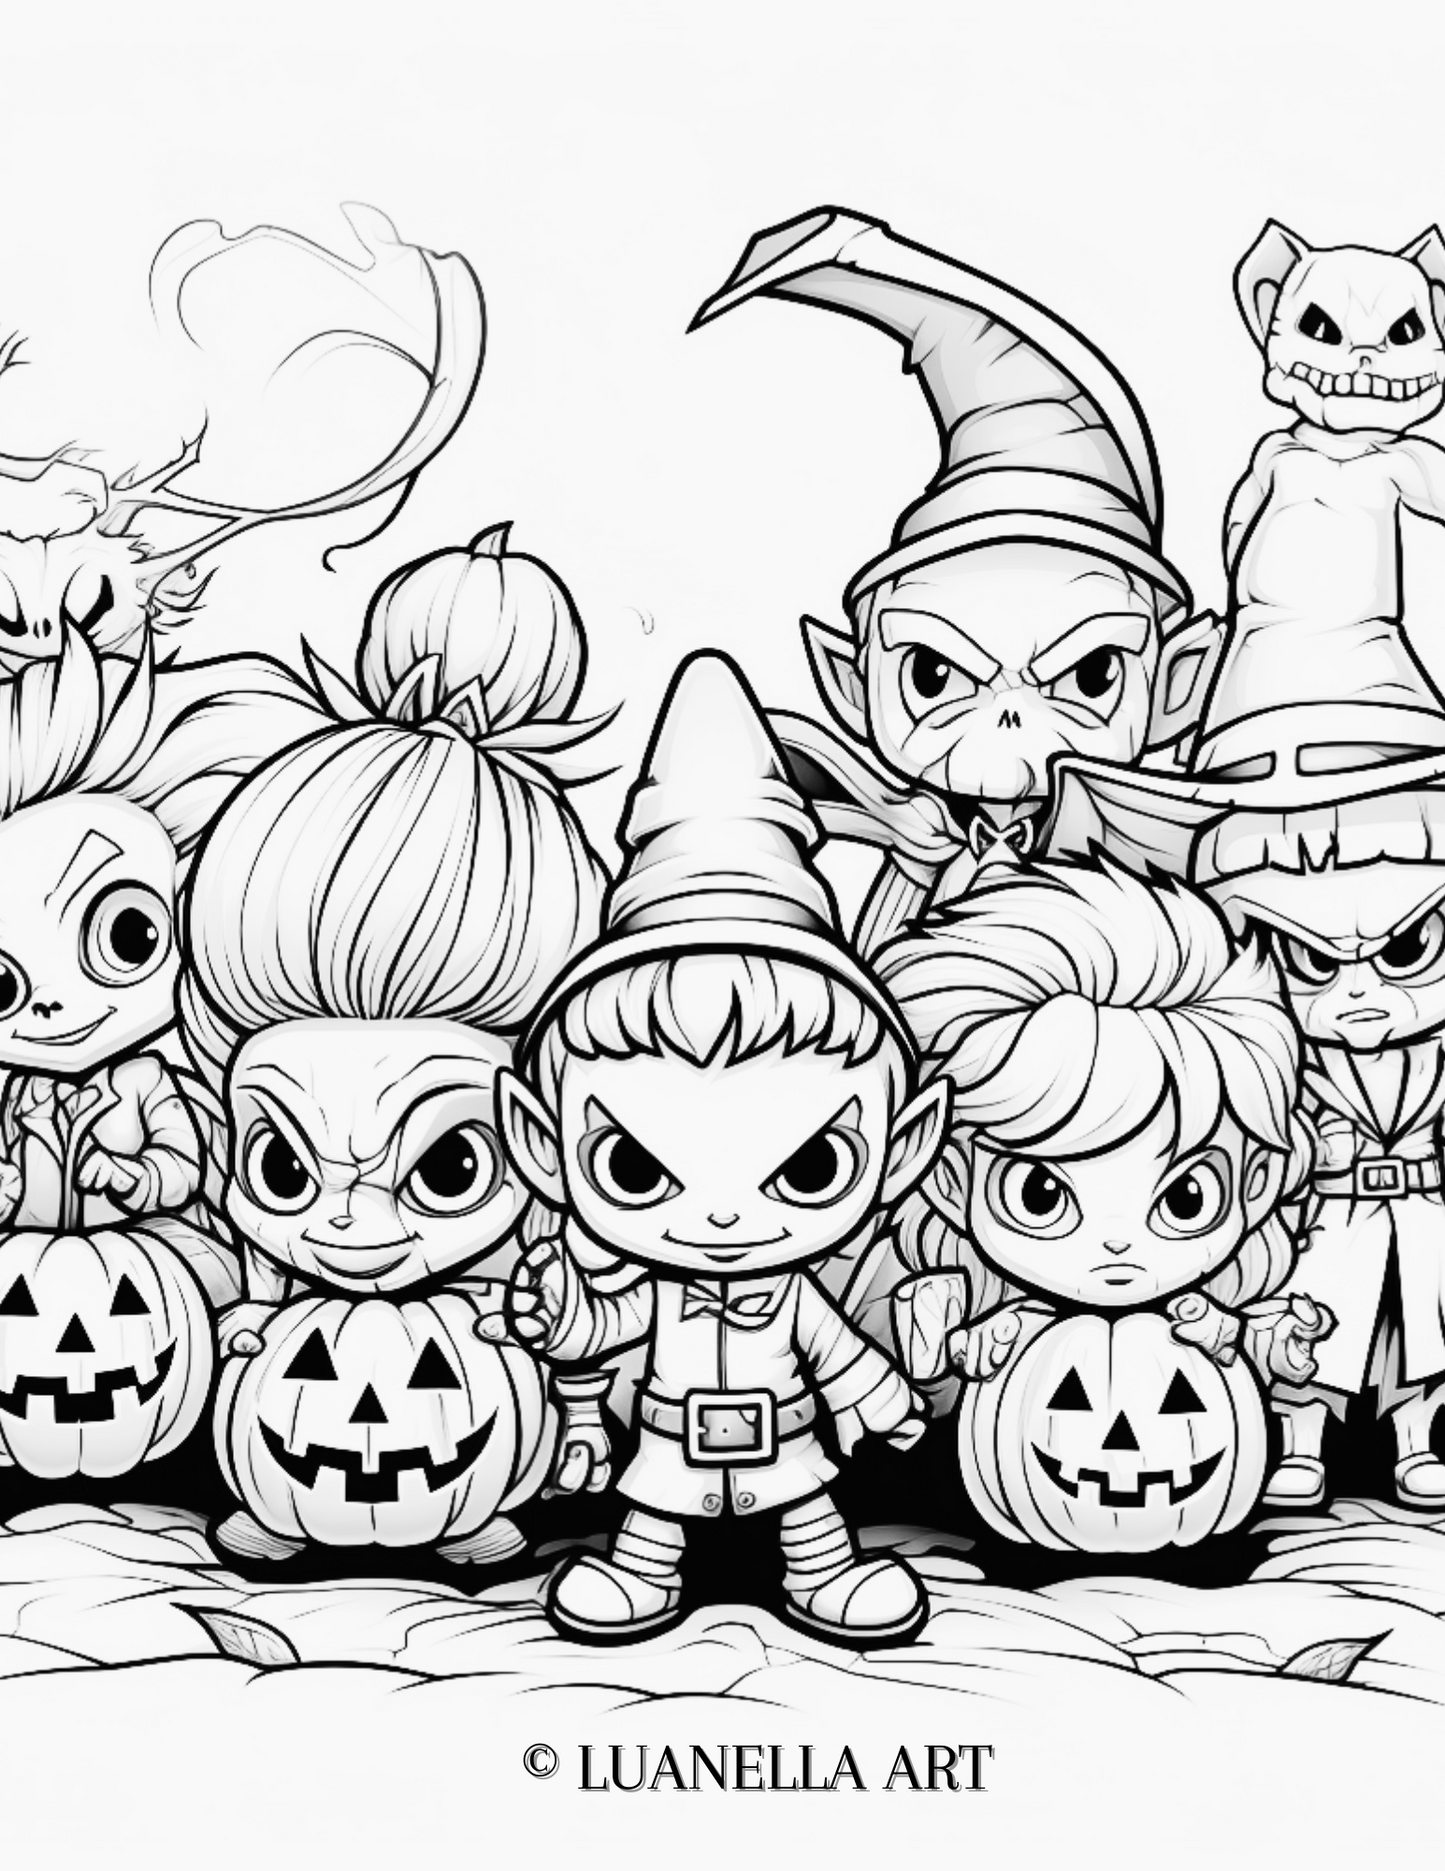 Fierce kids Halloween scene | Coloring Page | Instant Digital Download